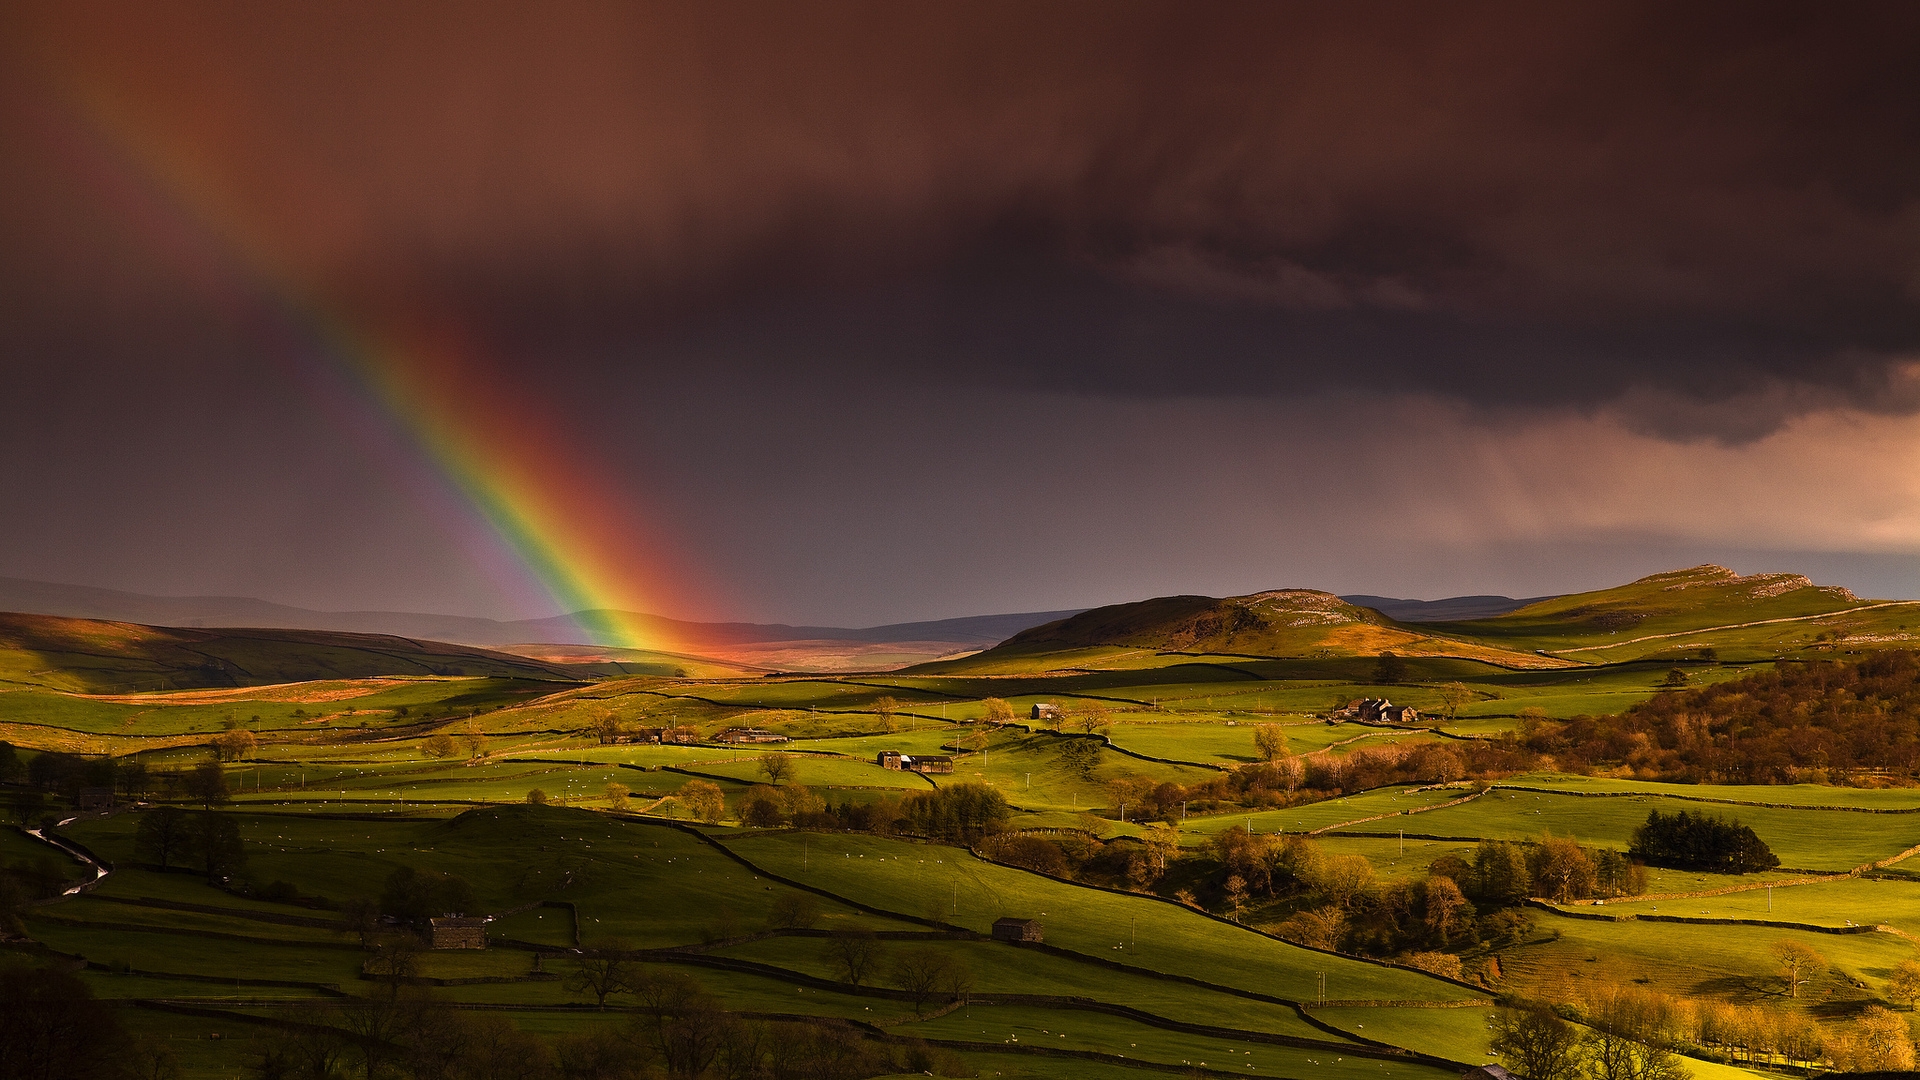 Rainbow Landscape for 1920 x 1080 HDTV 1080p resolution